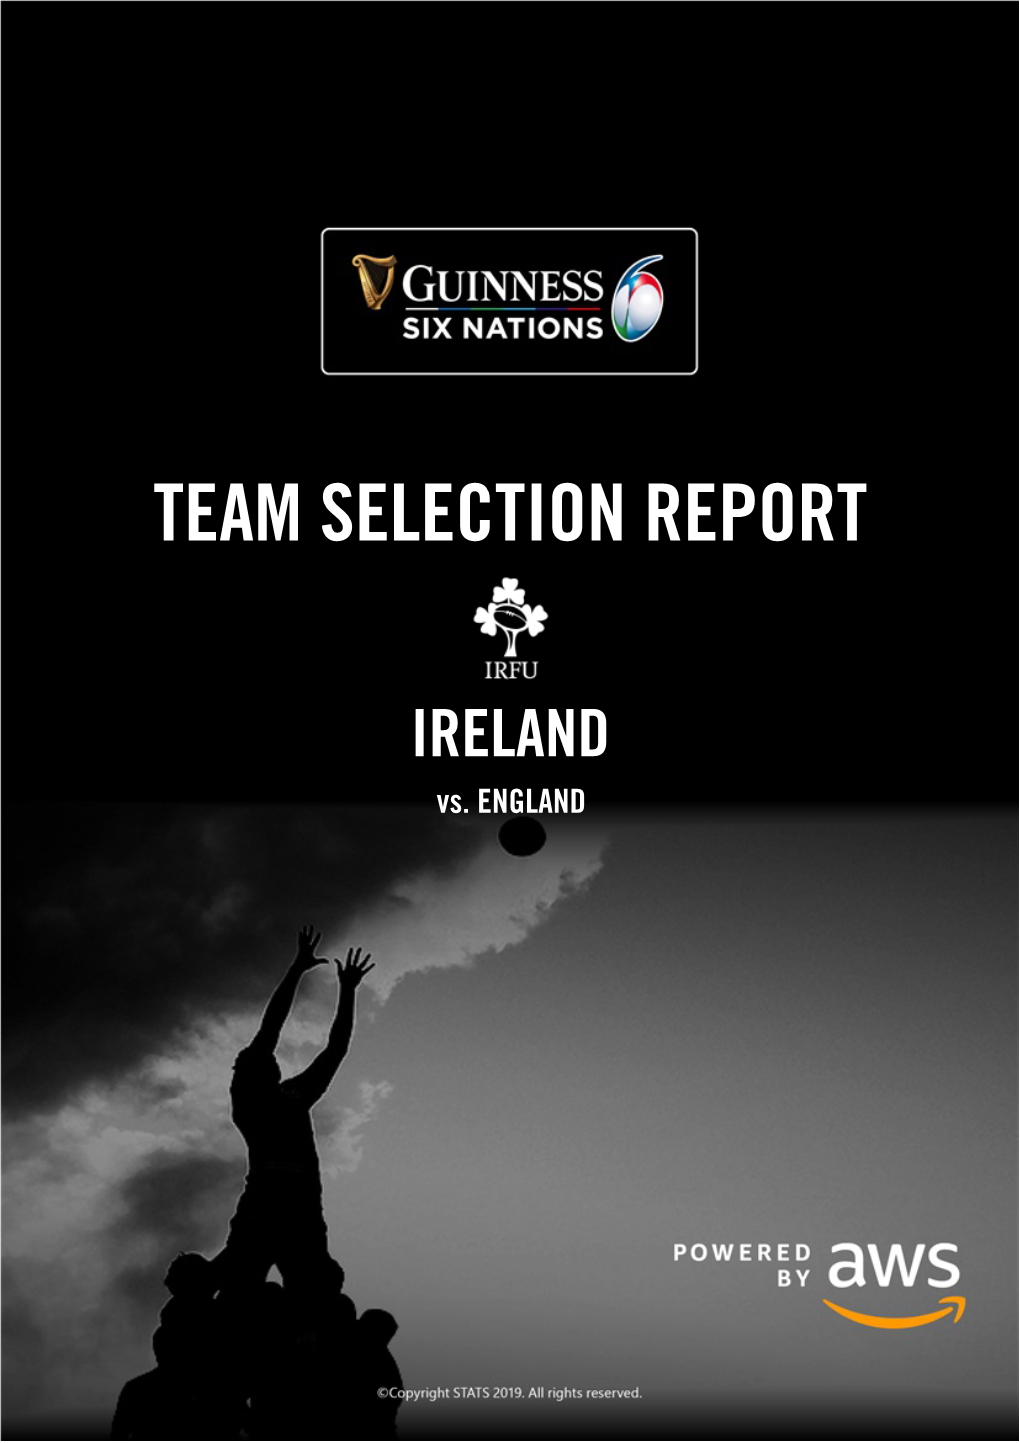 Ireland TEAM SELECTION REPORT